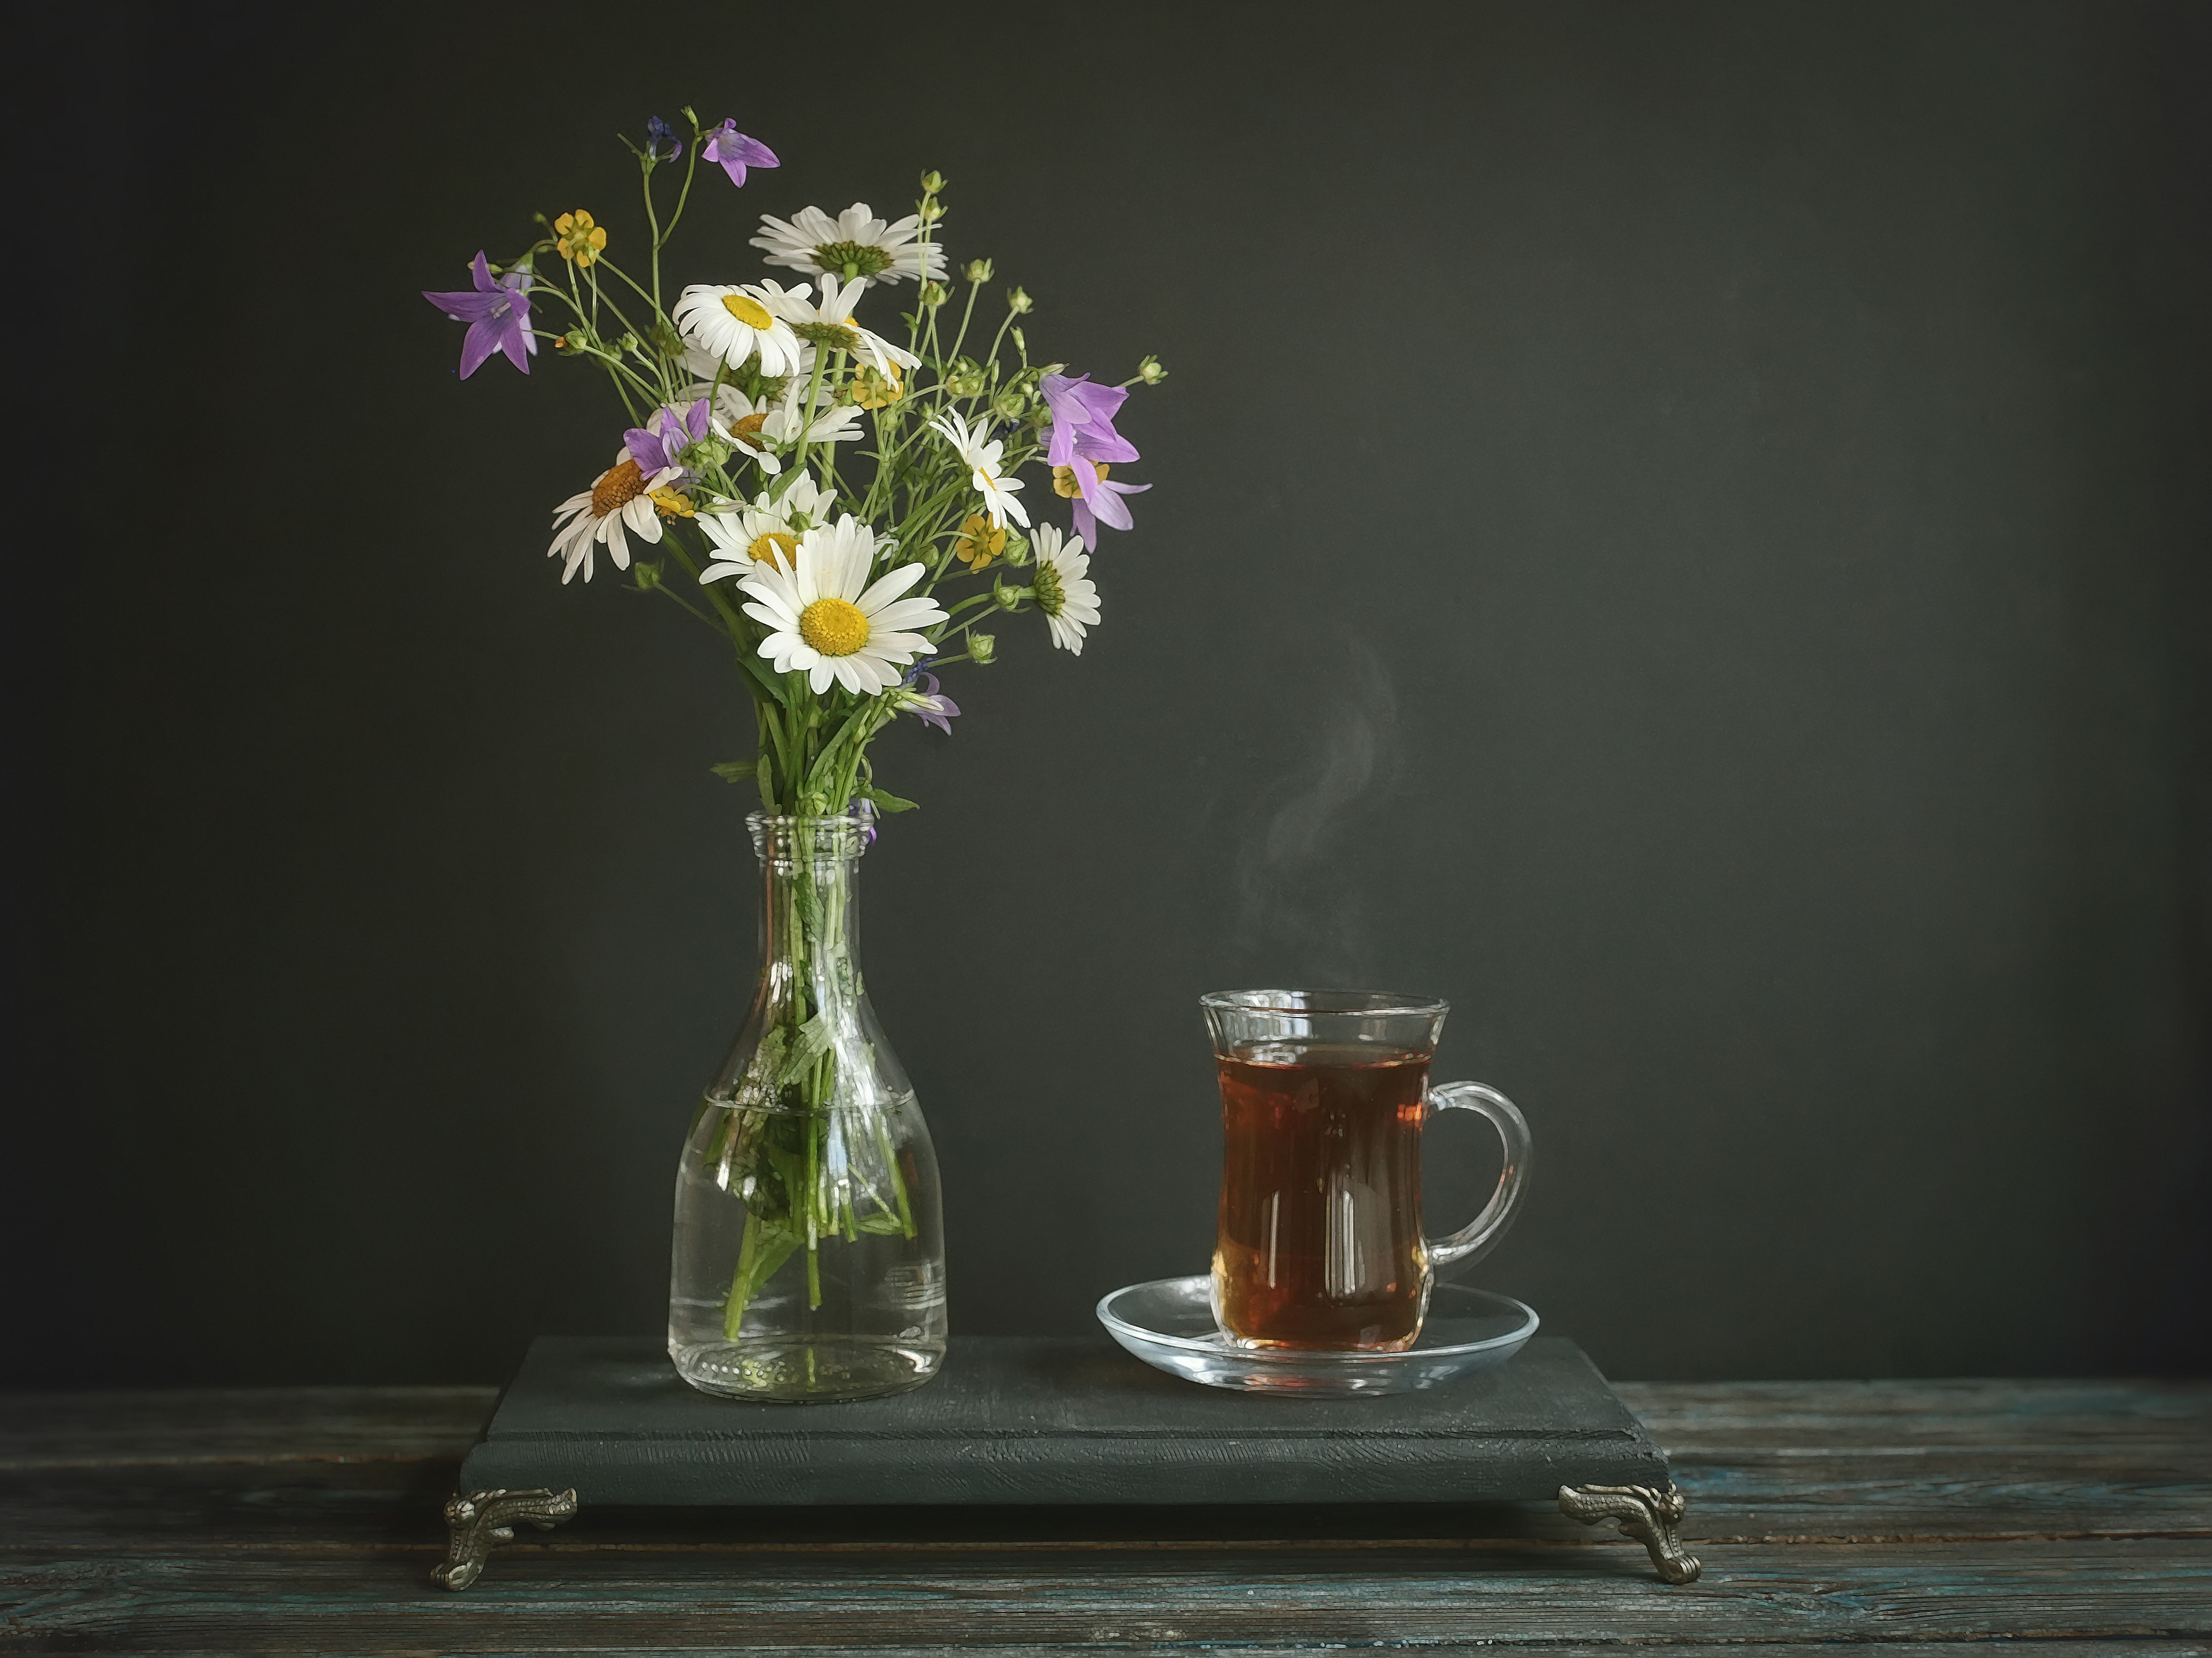 натюрморт, чашка чая, чайник, темный фон, flowers, tea, still life, drink, aroma, cup, чашка, Стасов Виталий